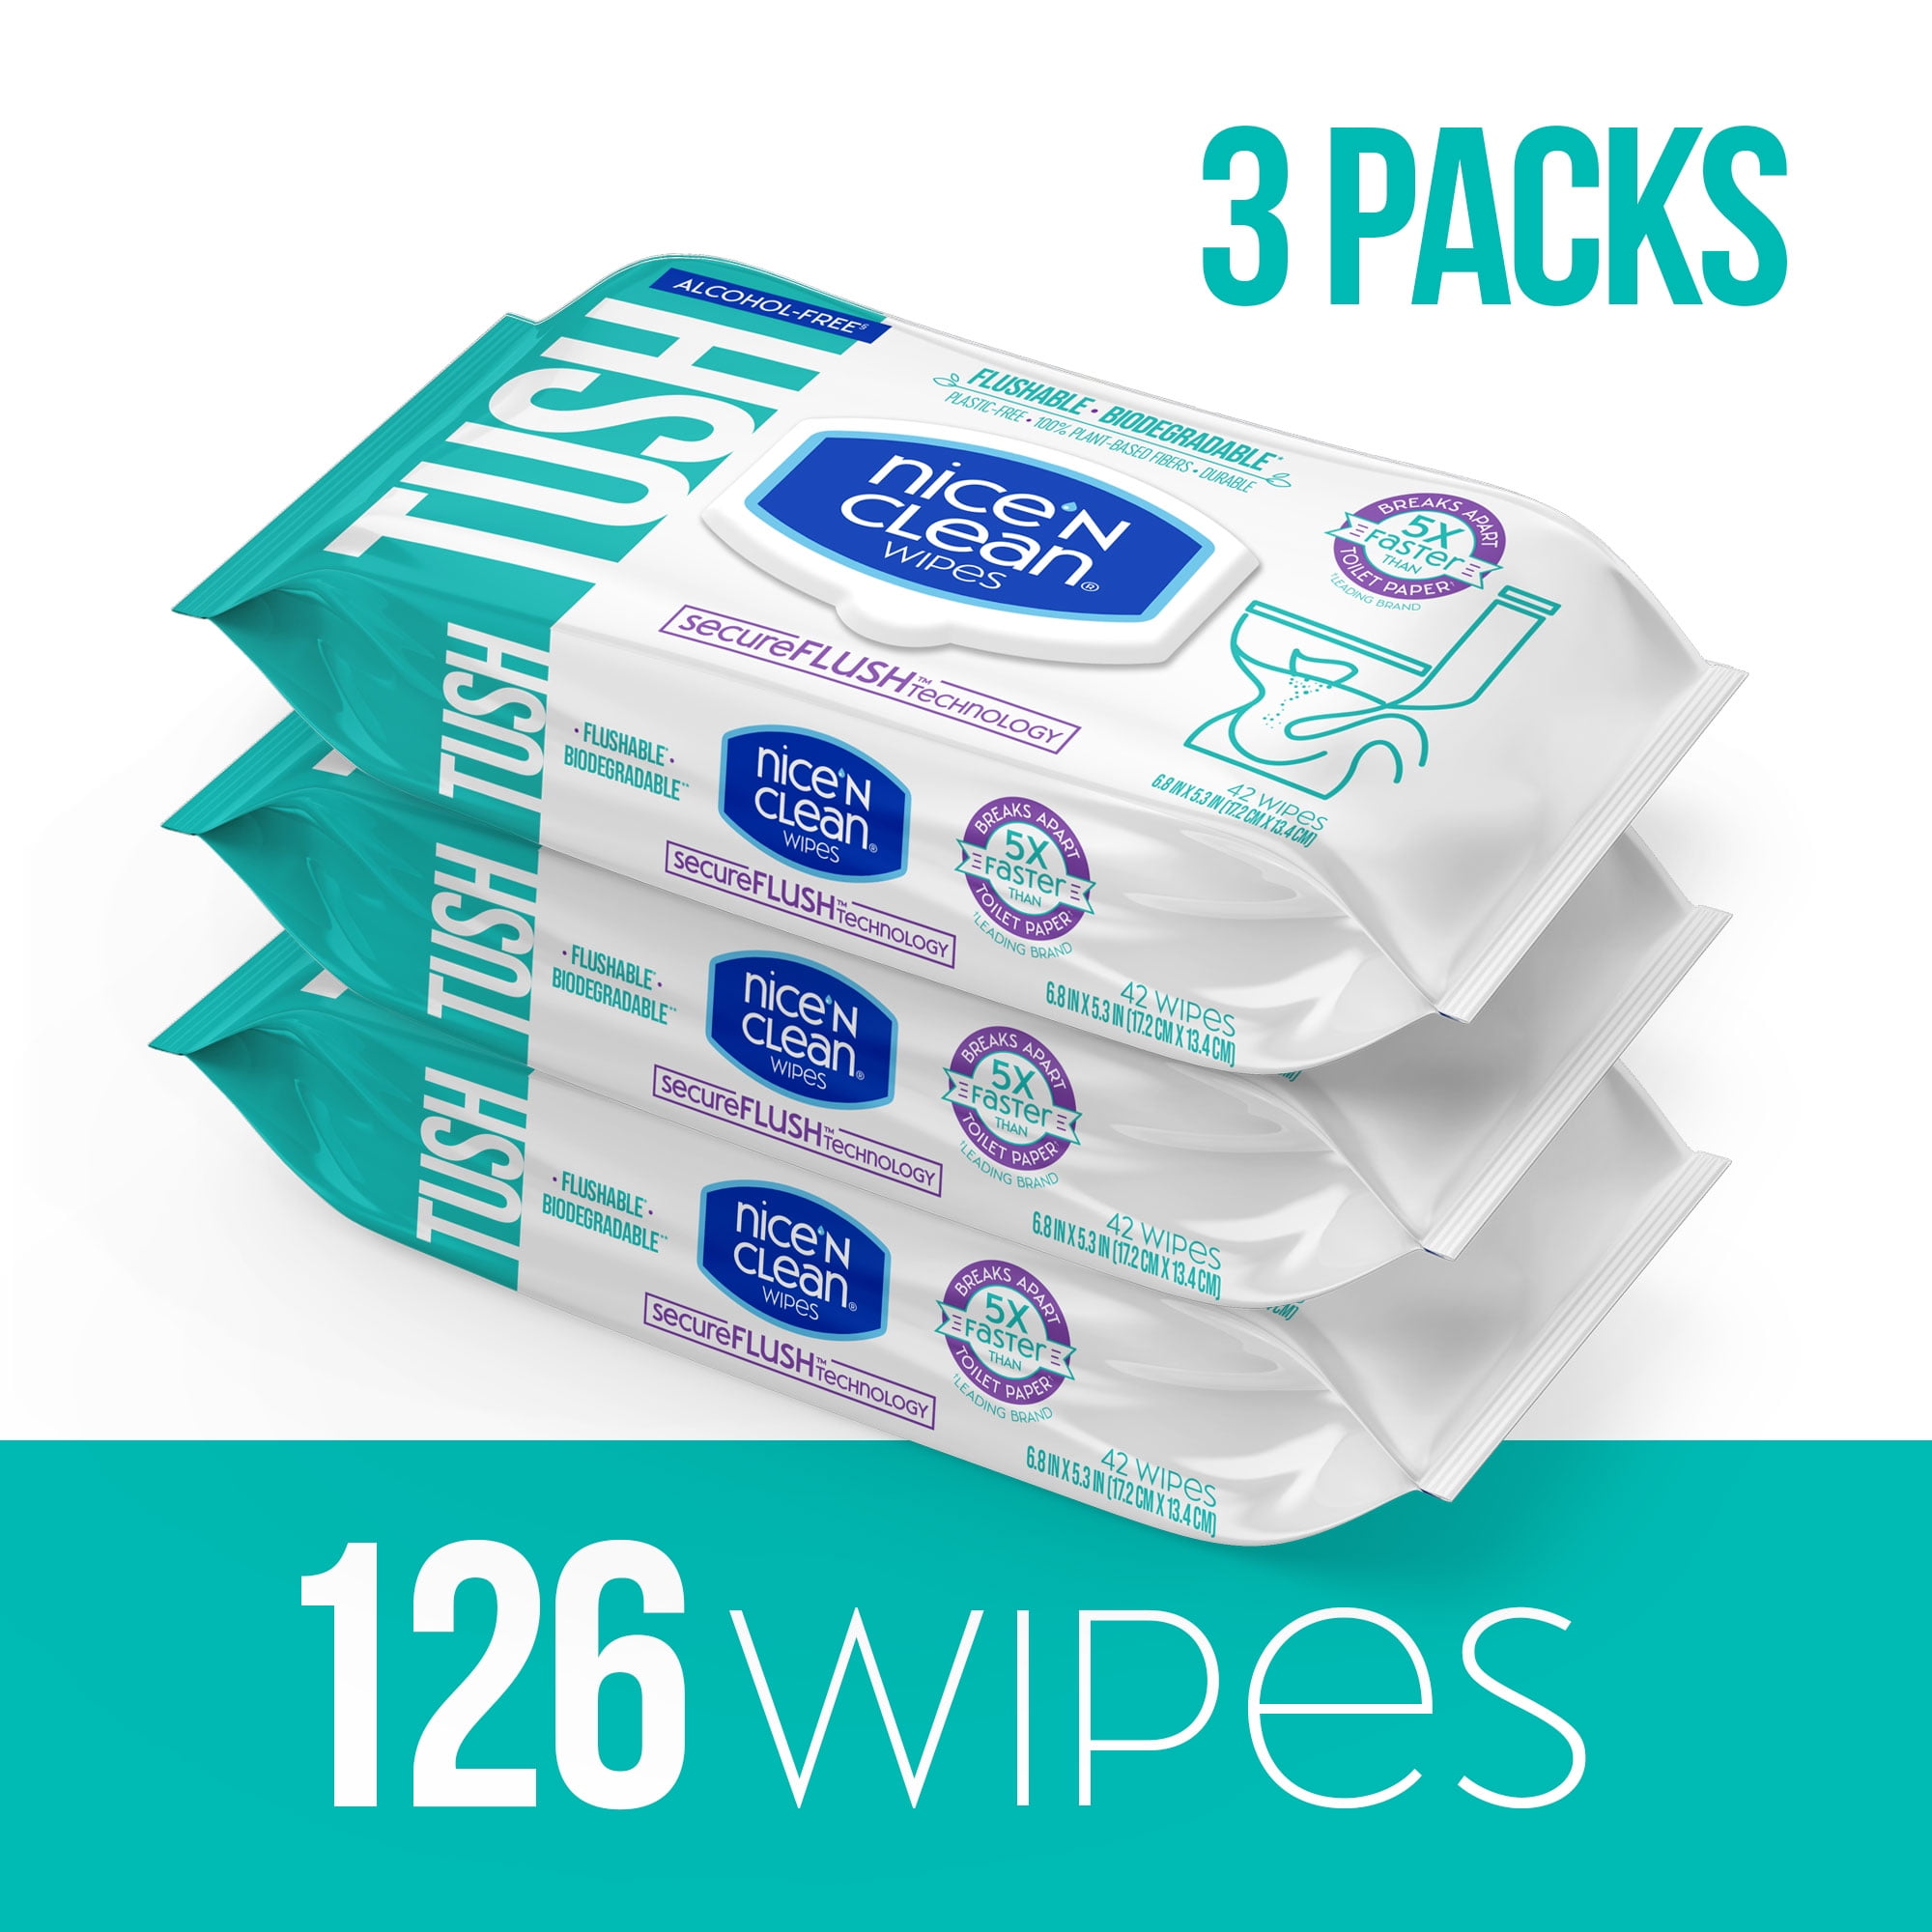 Nice 'N CLEAN SecureFLUSH Biodegradable Alcohol Free Flushable Wipes, Gentle for Sensitive Skin, 3 Flip-Top Packs (126 Total Wipes)